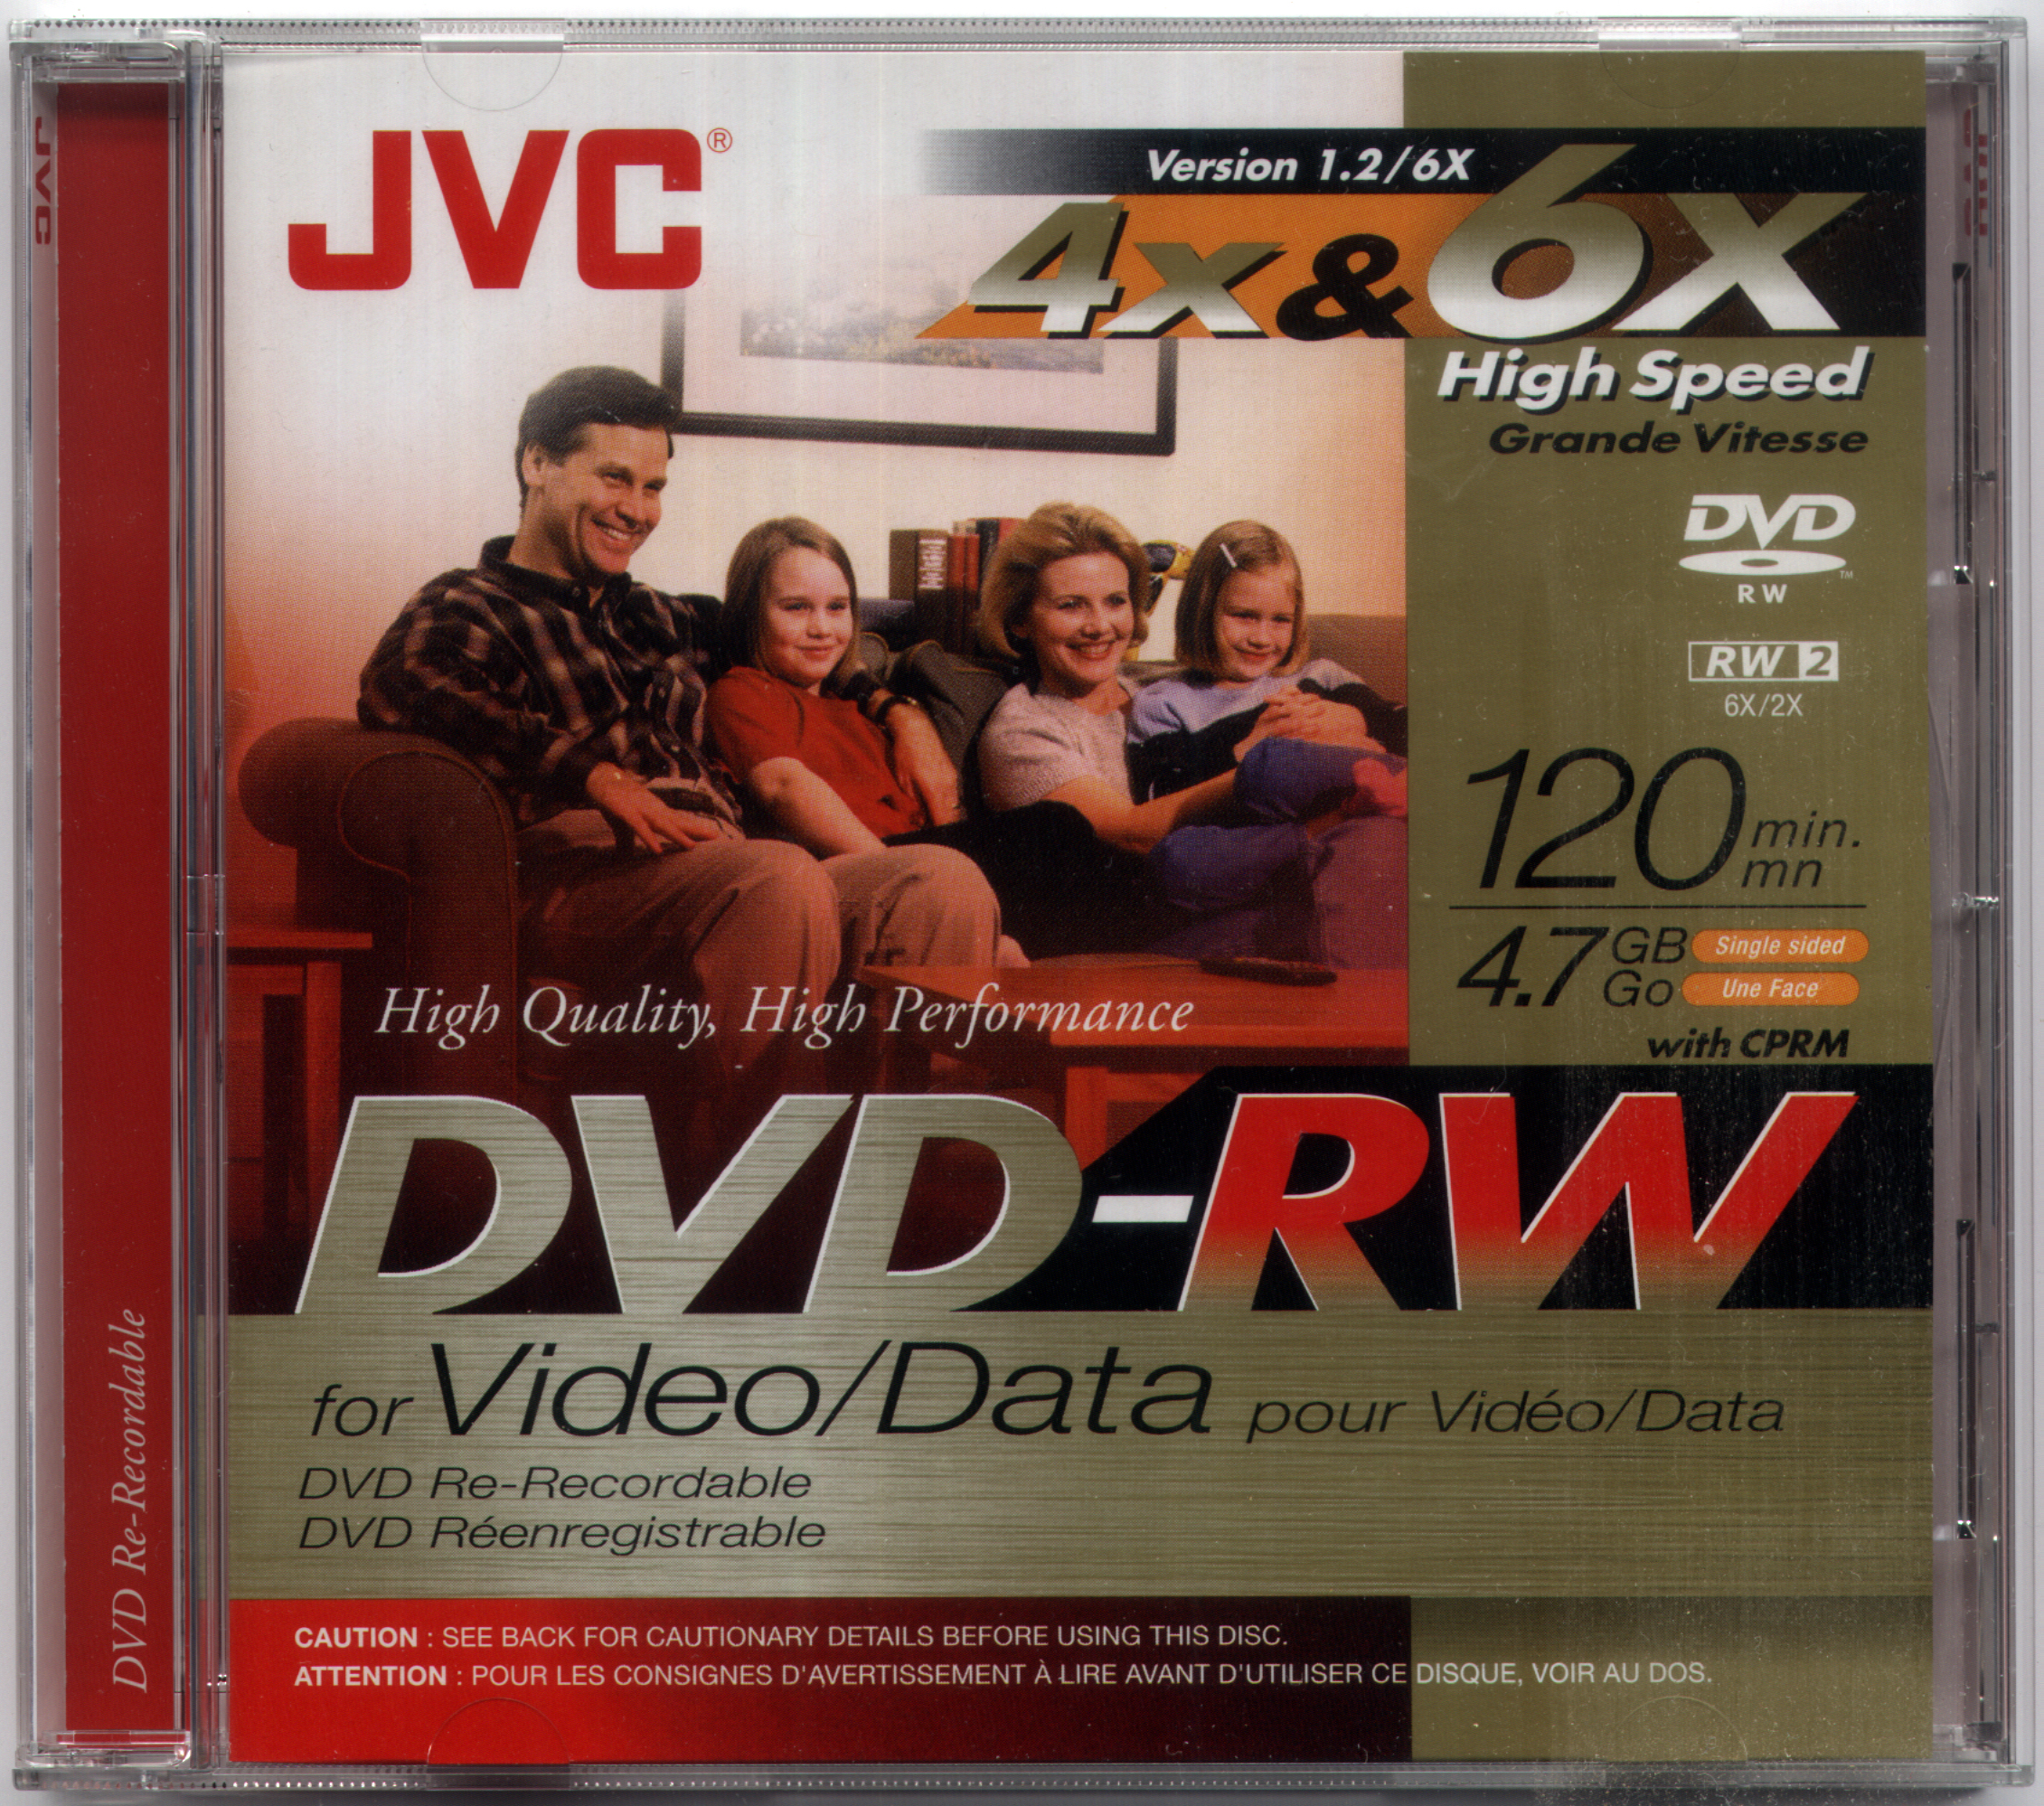 jvc portable dvd player instruction manual